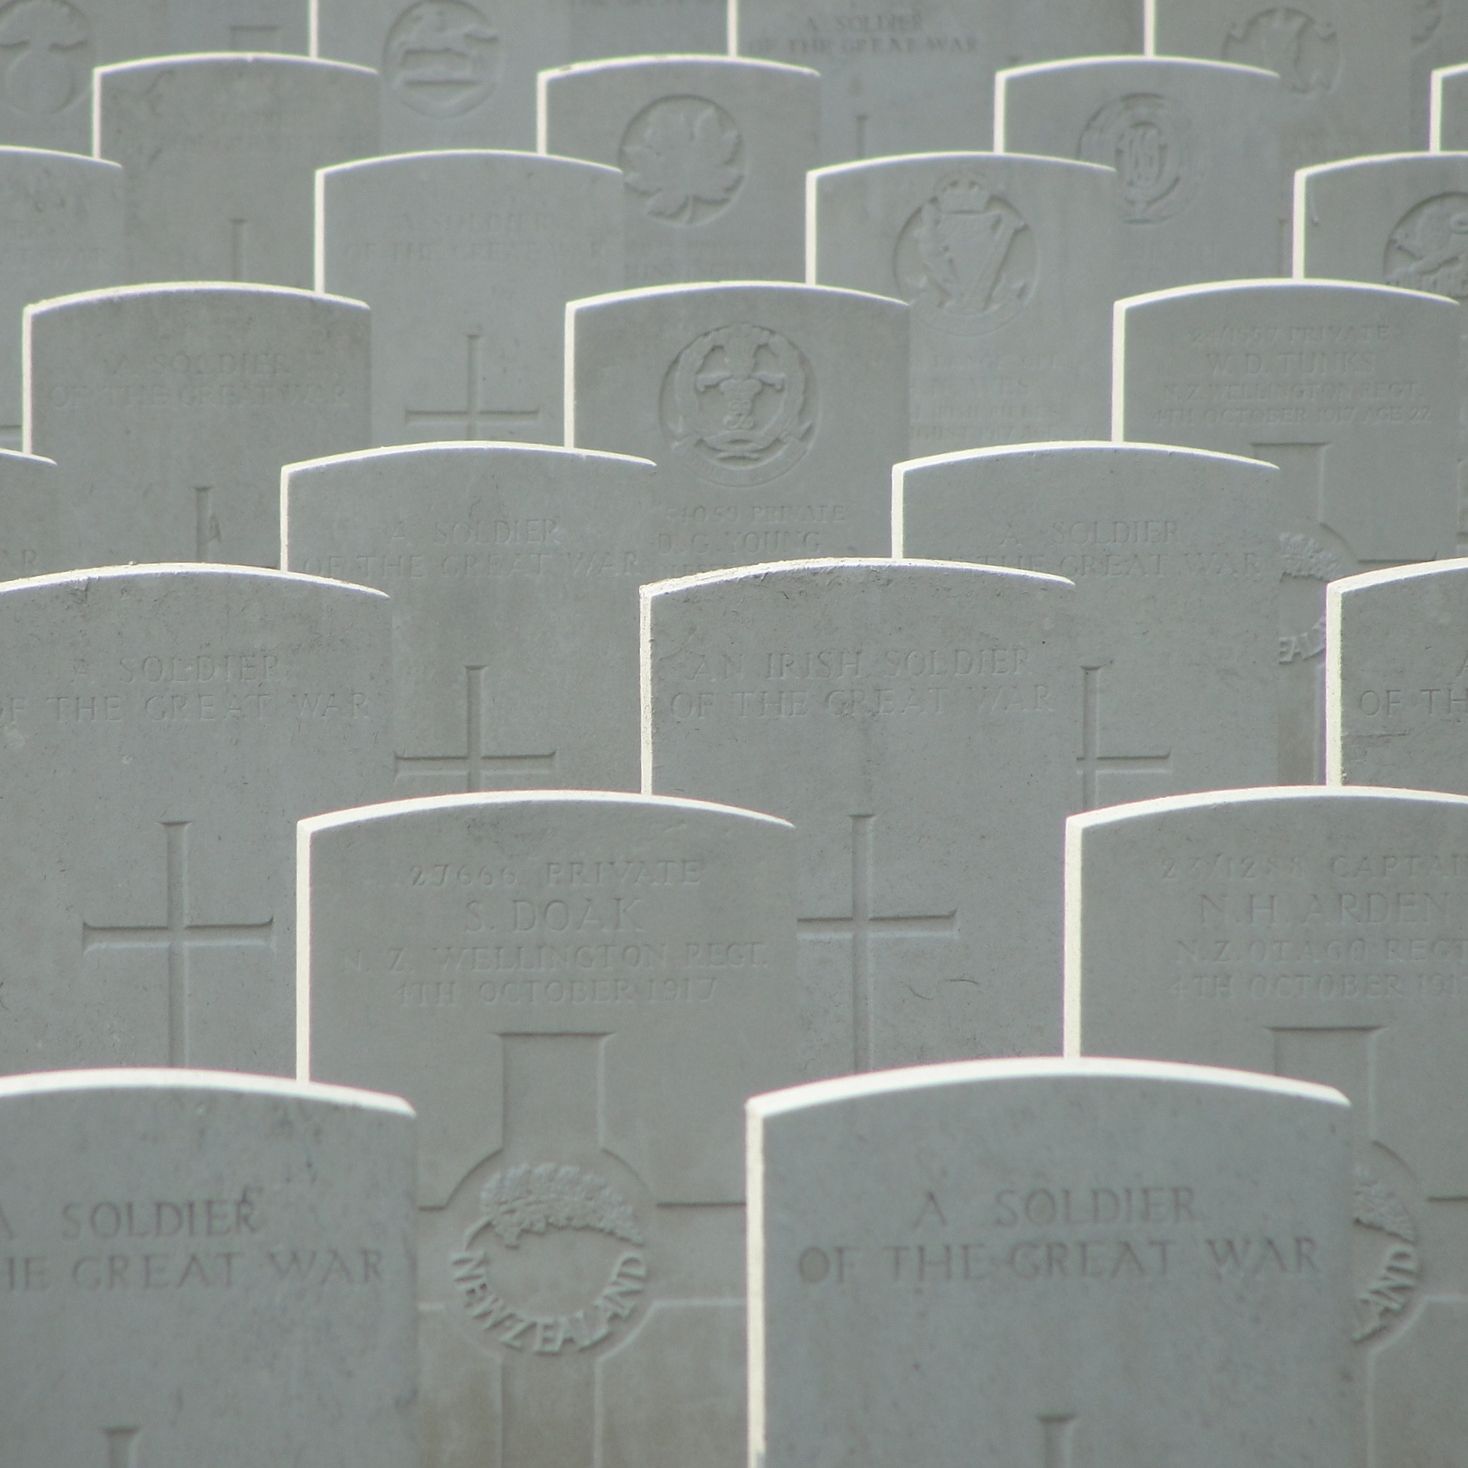 Tyne Cot Military Cemetery